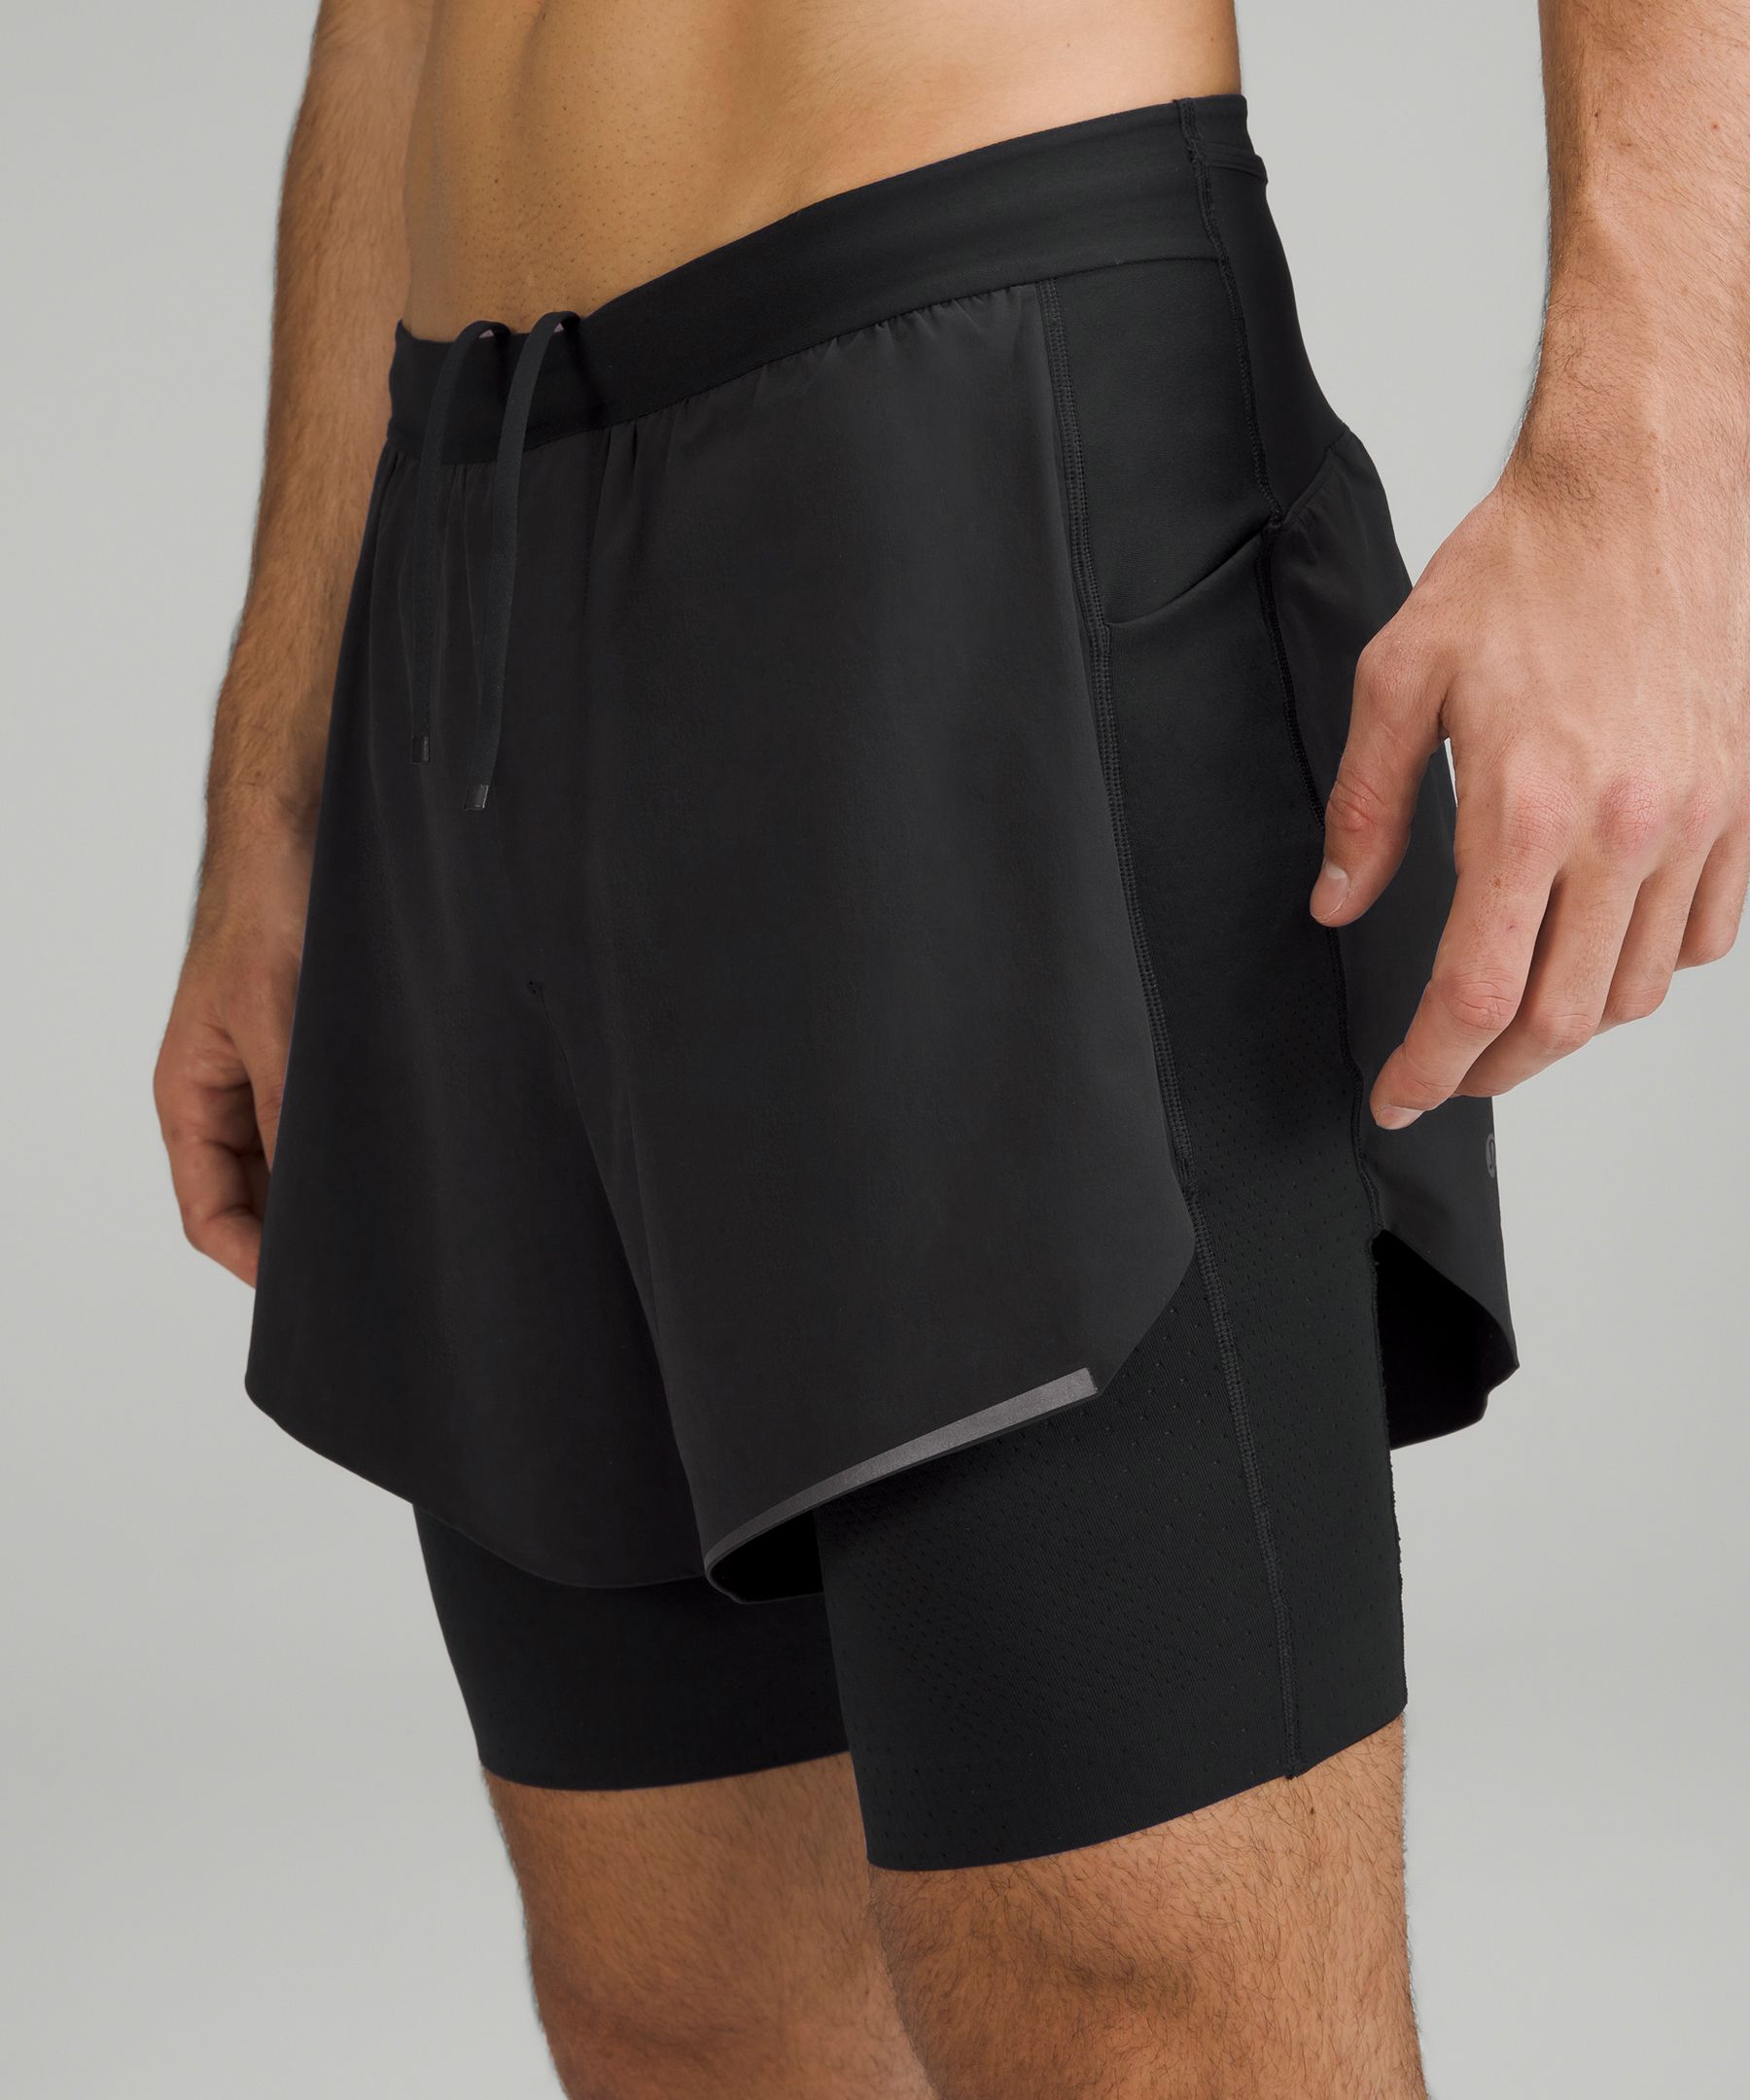 SenseKnit Composite Running Short, Men's Shorts